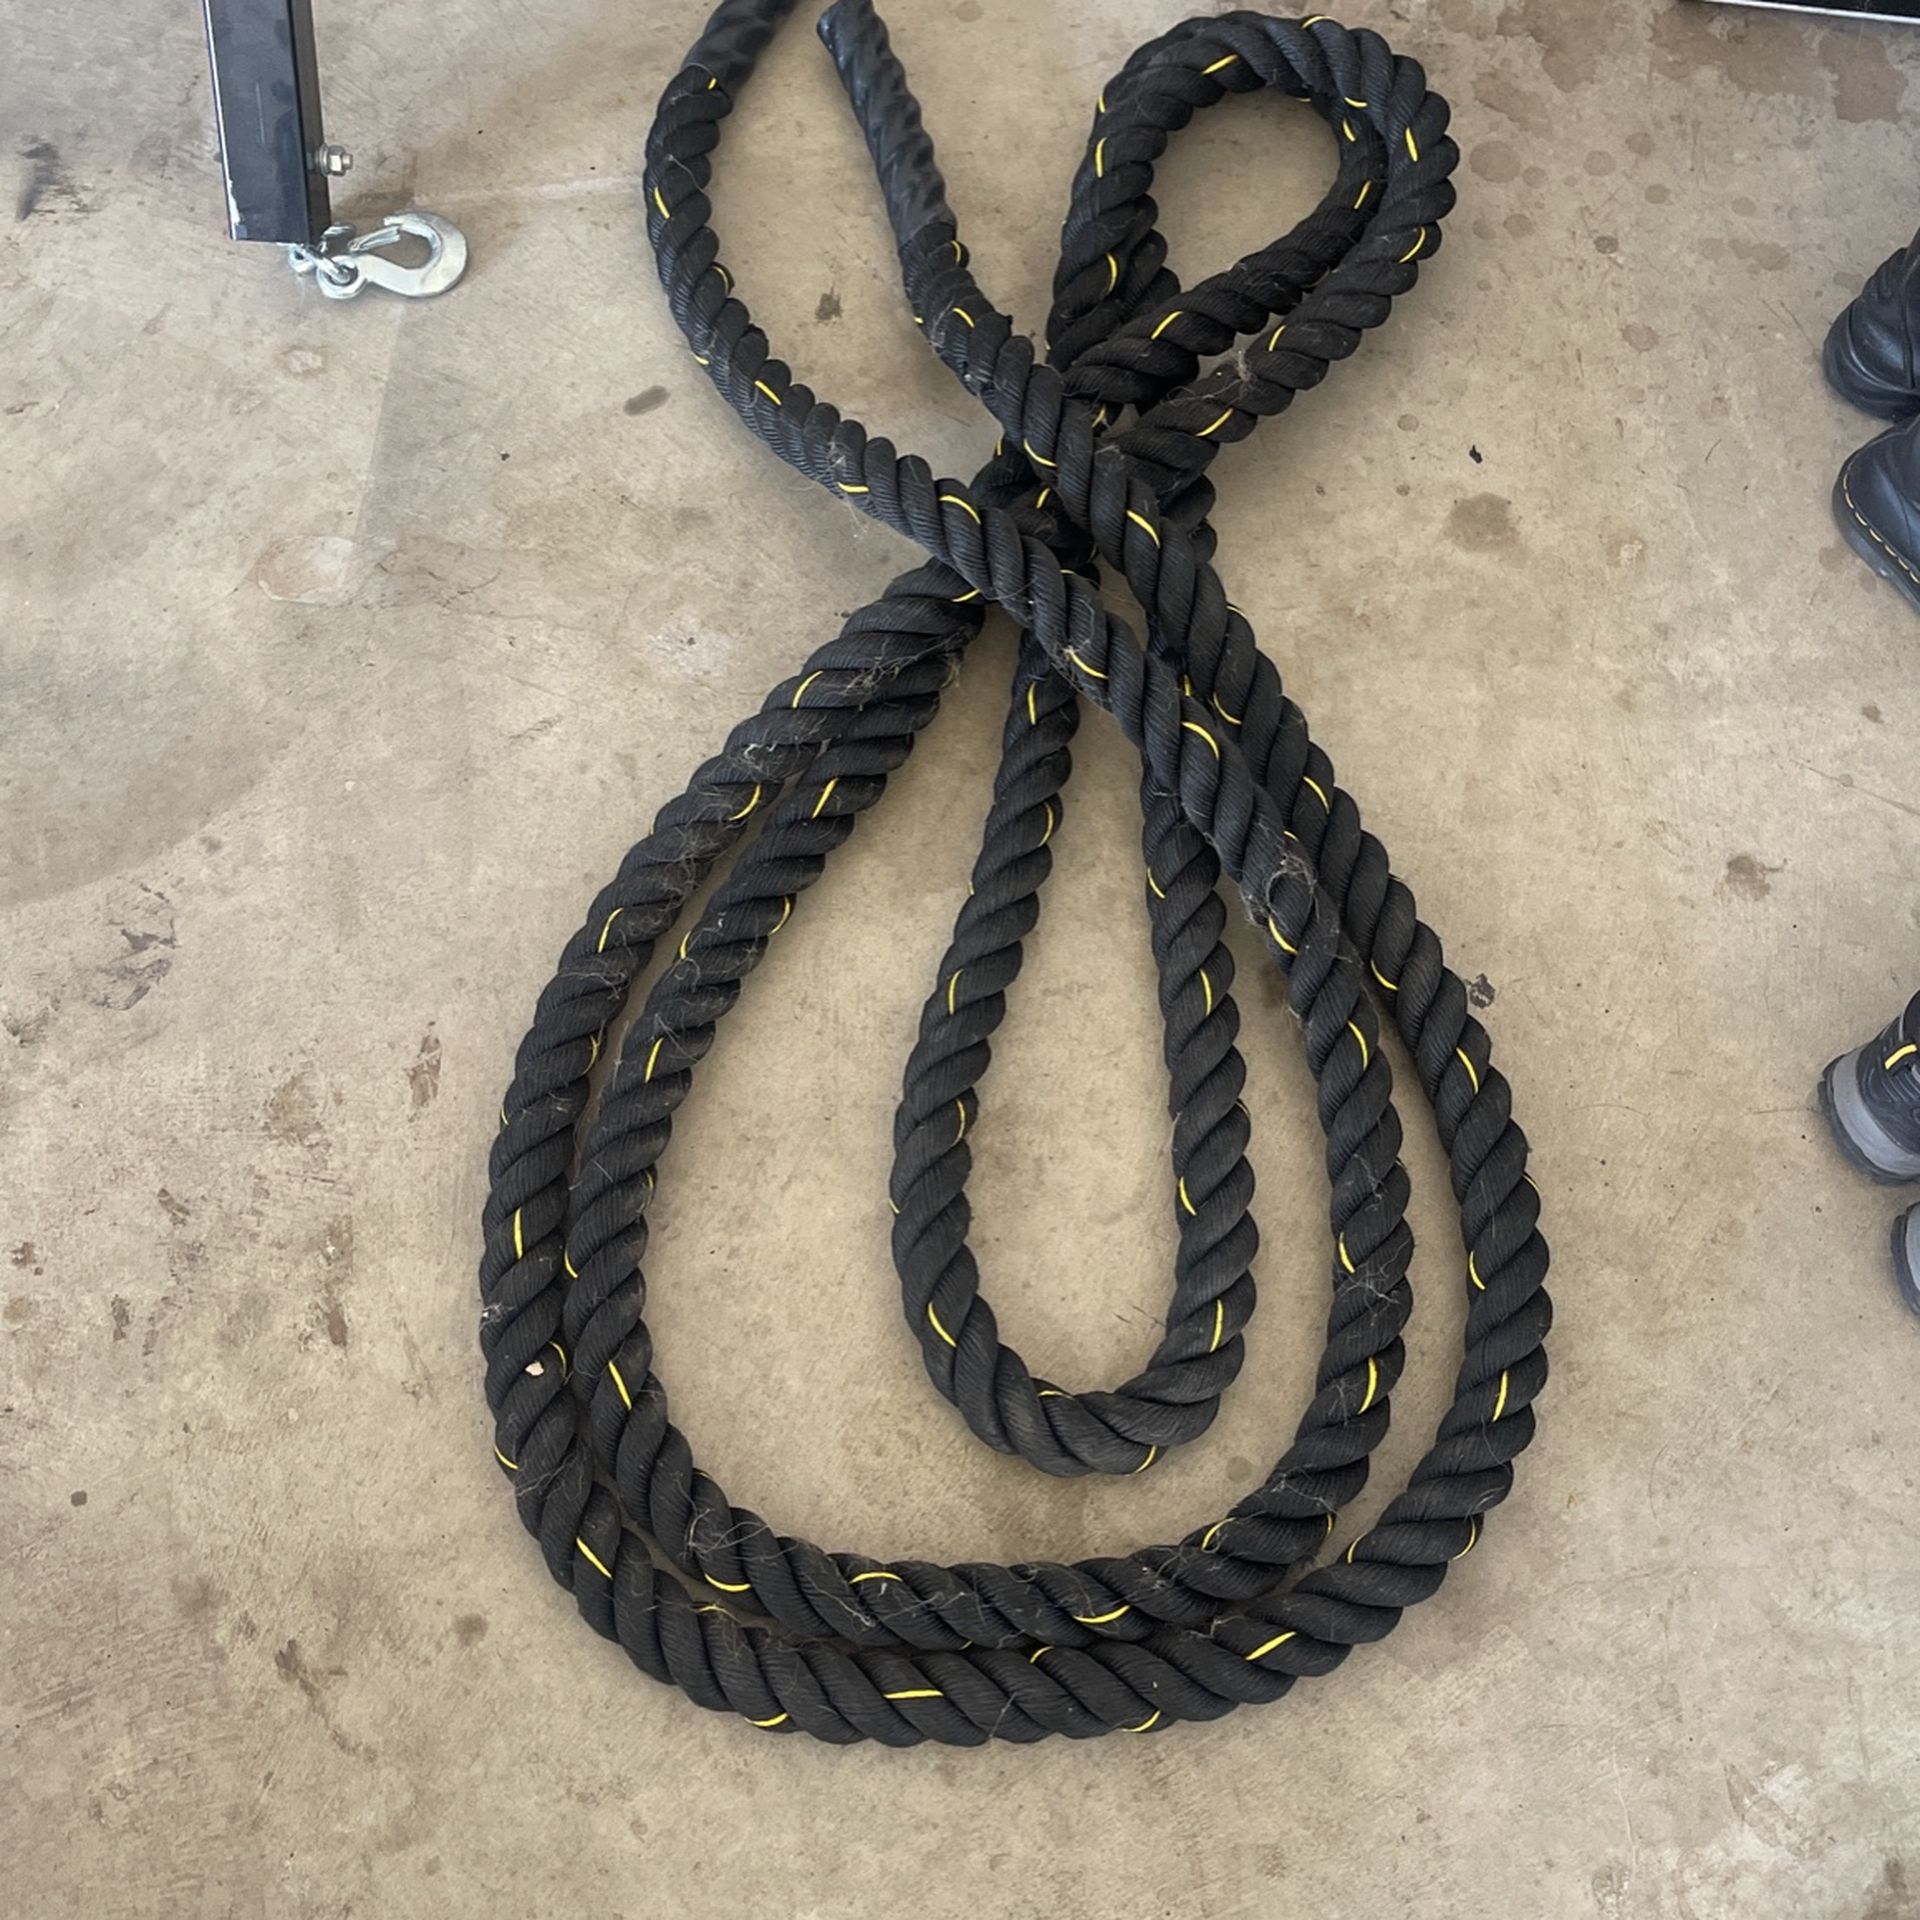 Hulkfit exercise rope